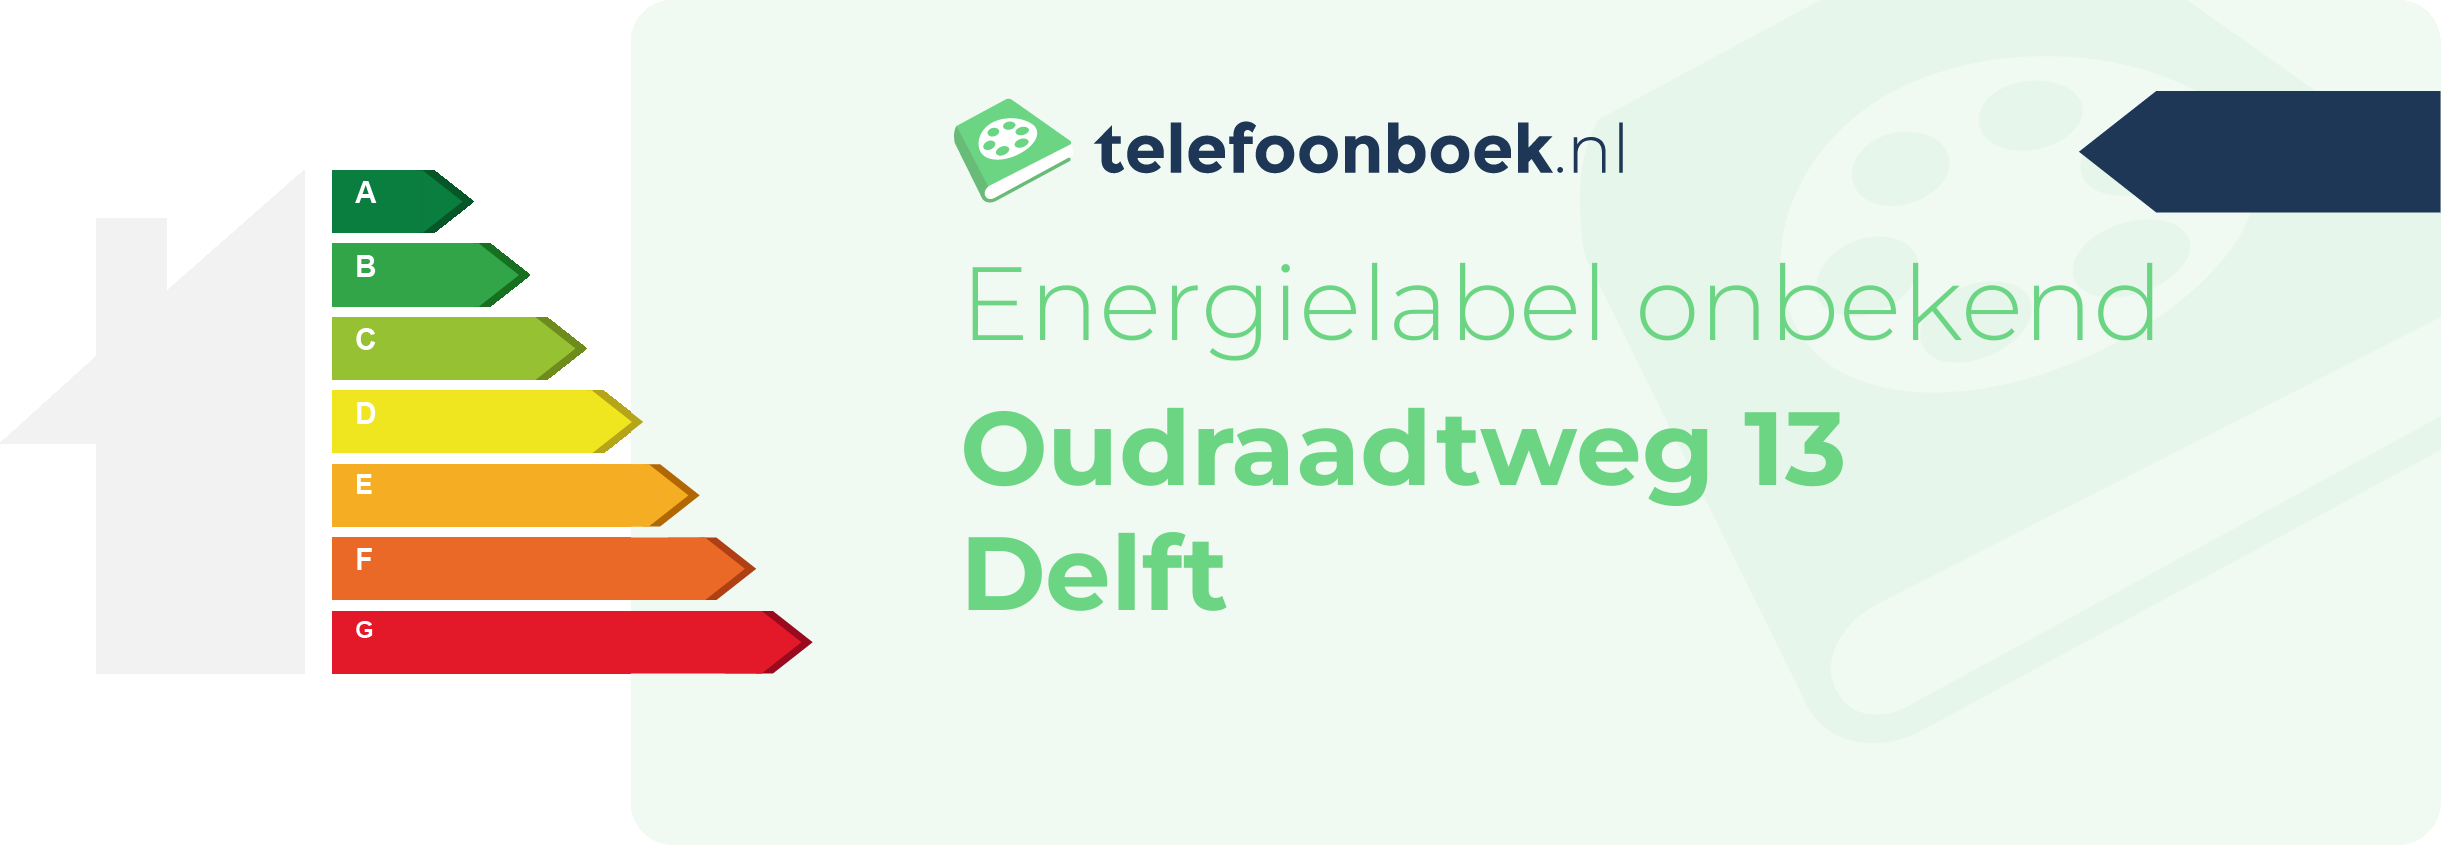 Energielabel Oudraadtweg 13 Delft